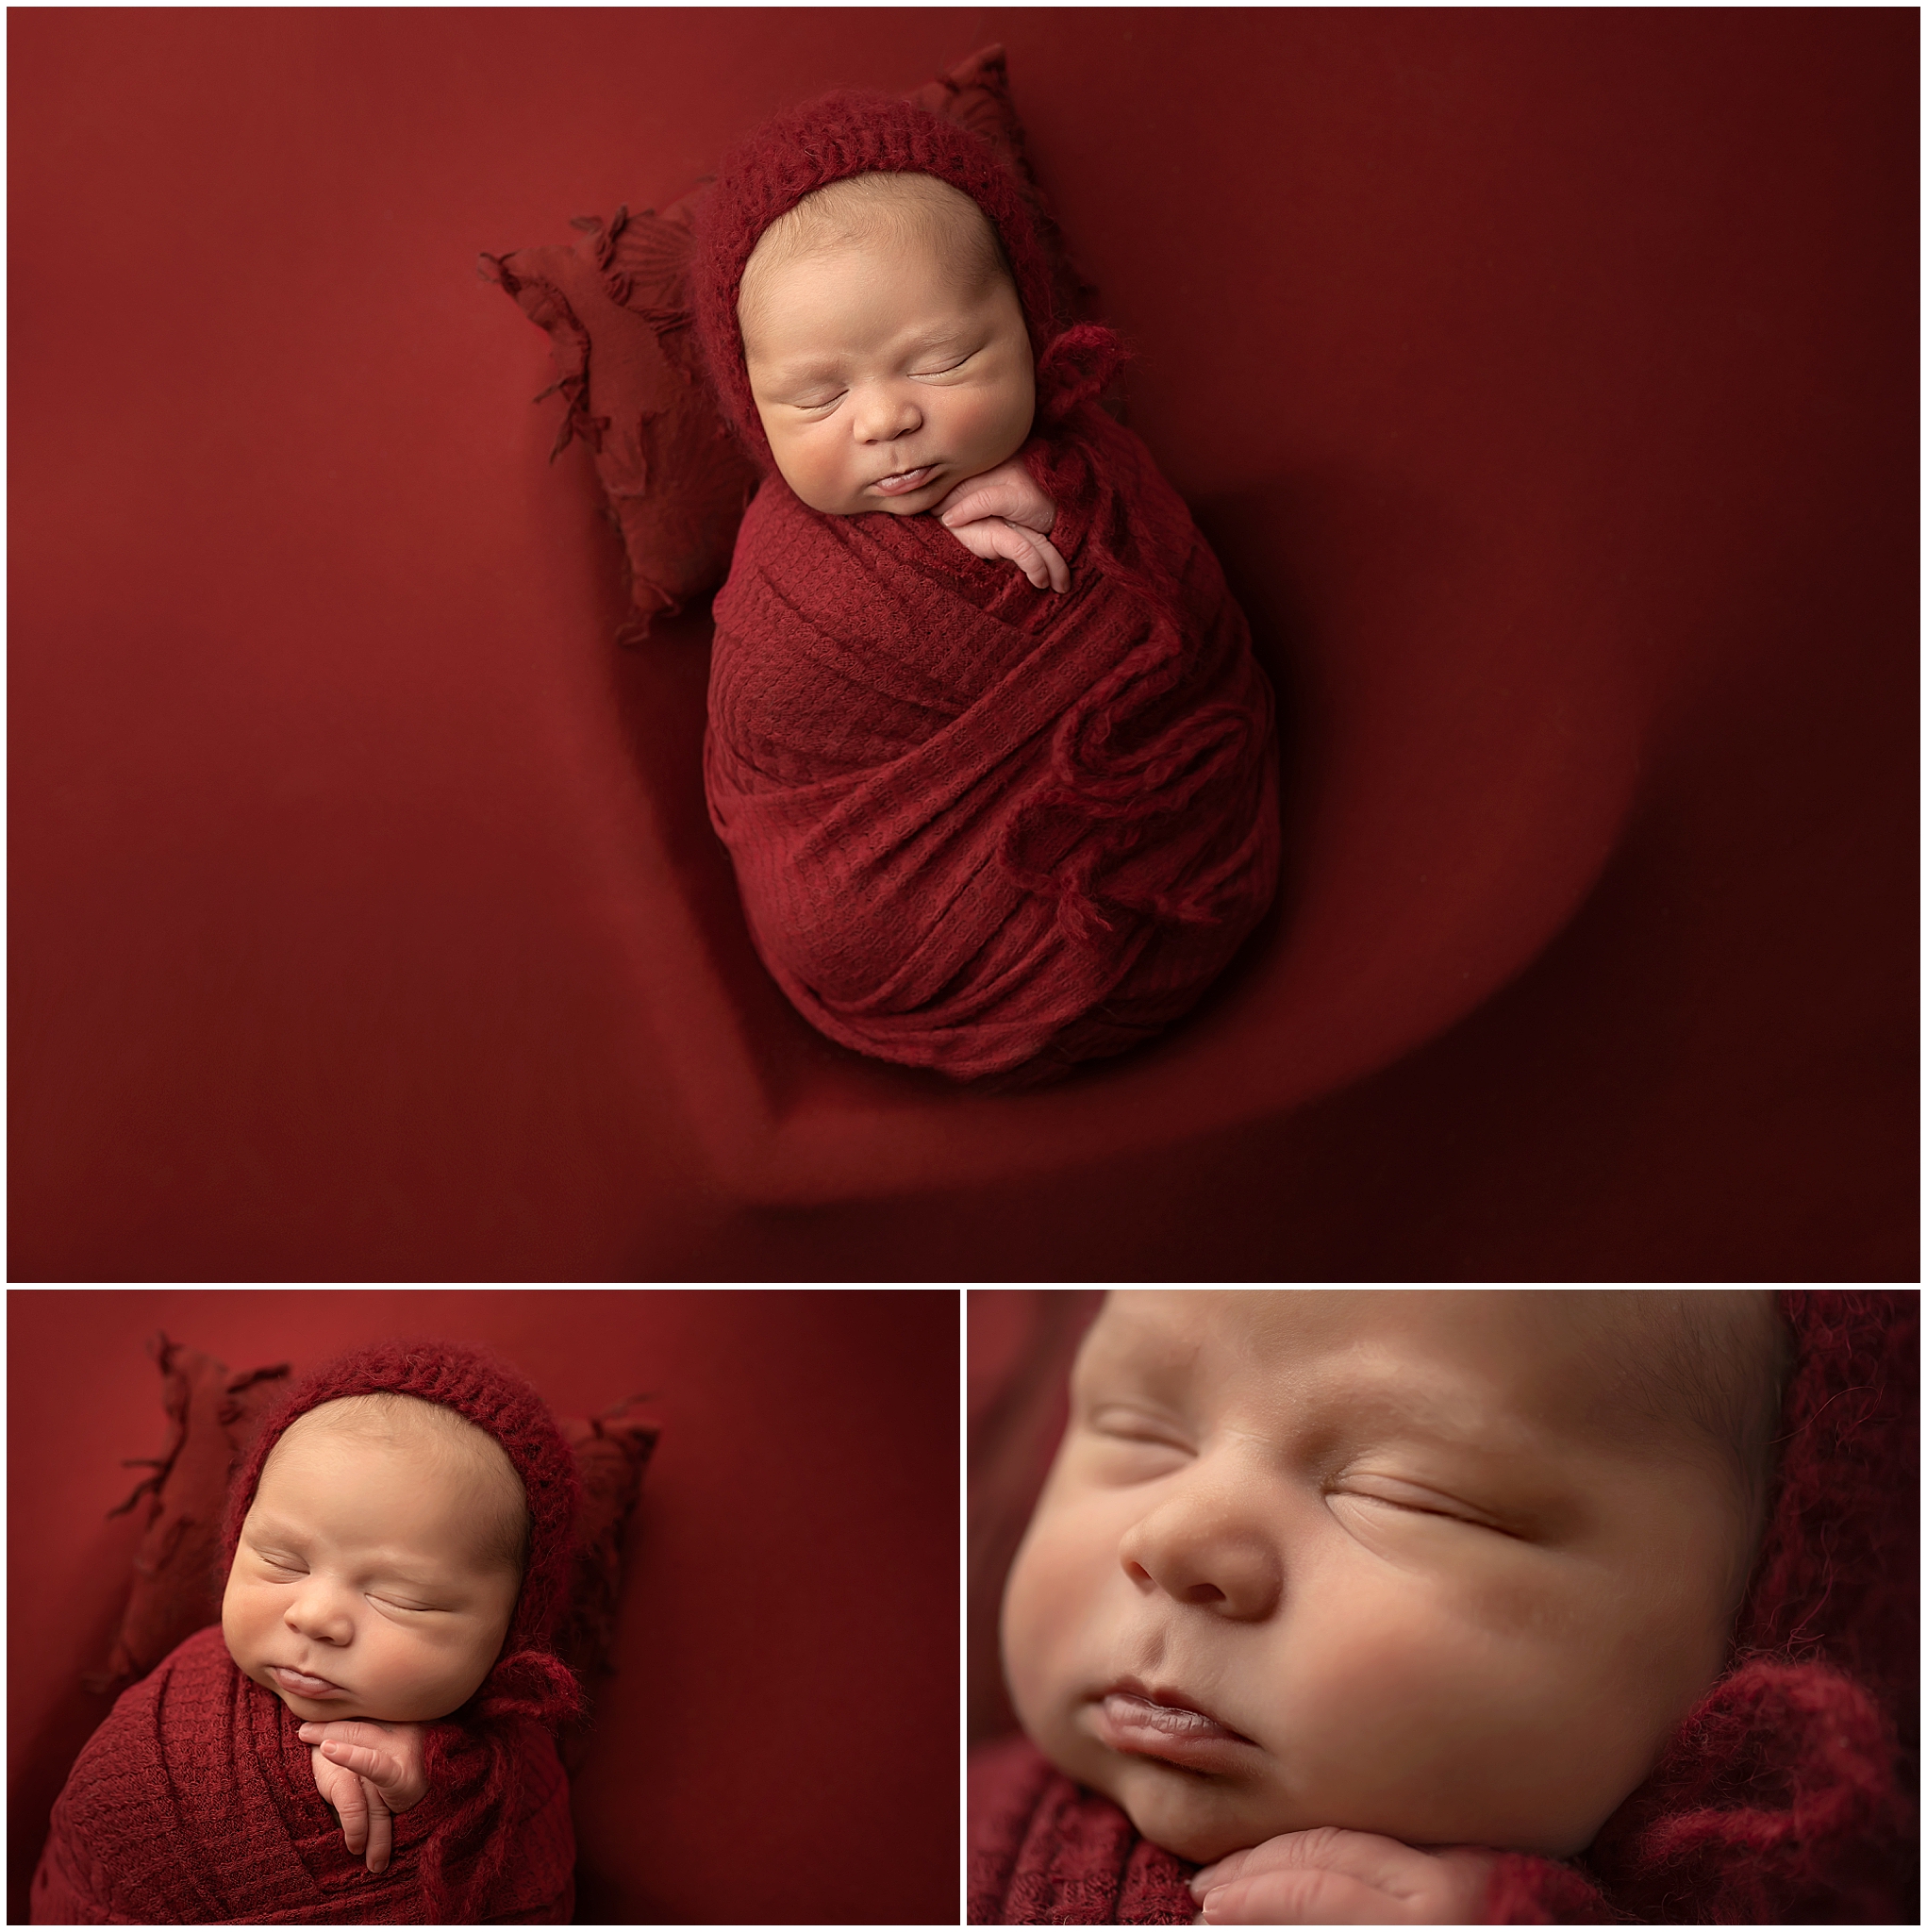 newborn baby girl sleeping inside a heart t london ontario photography studio